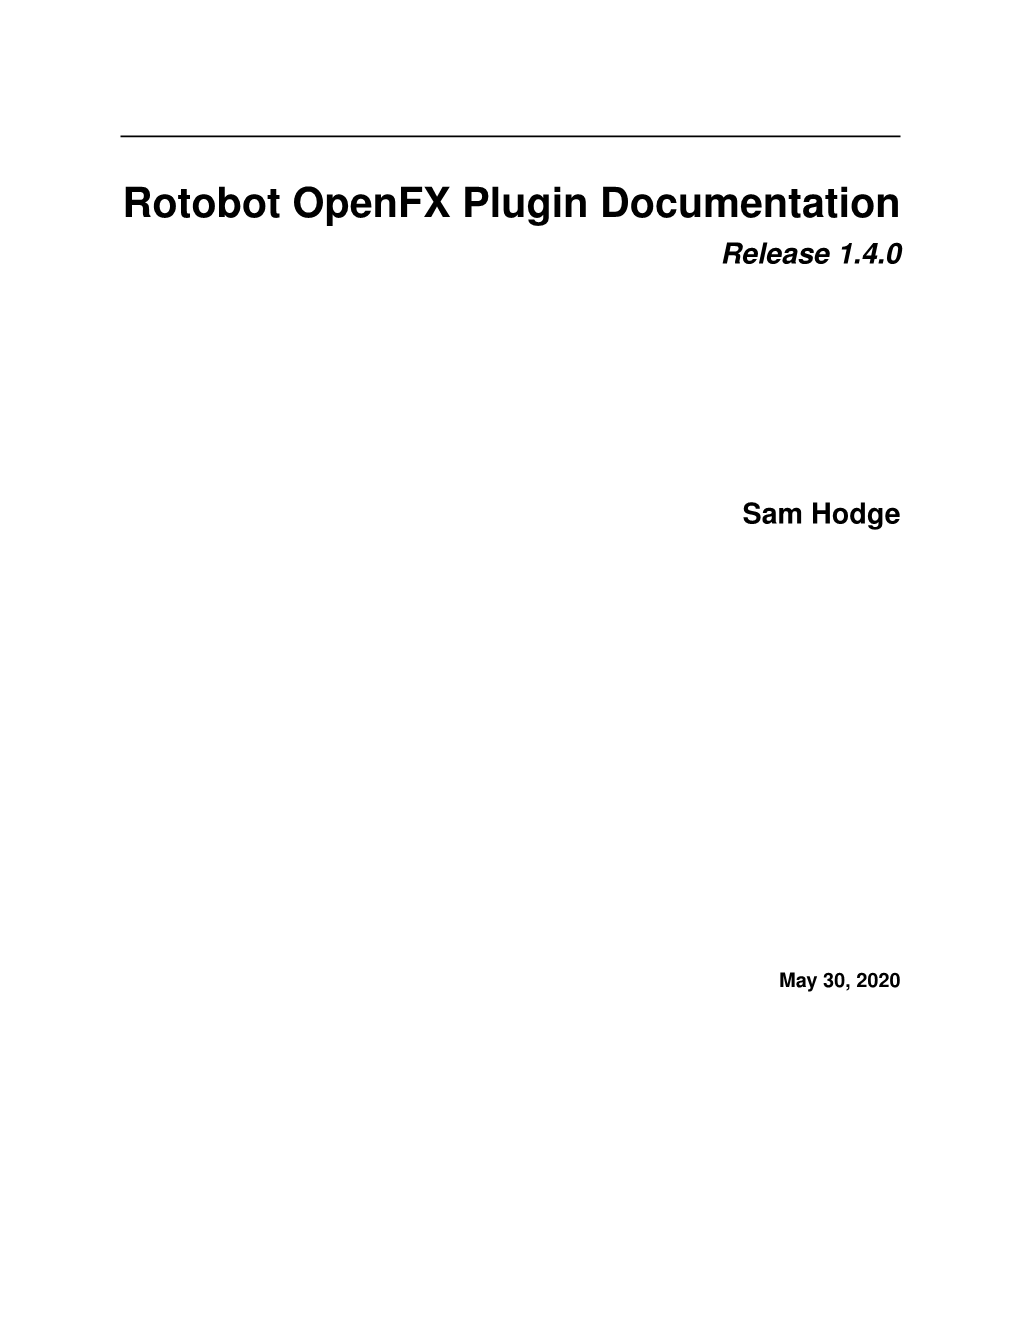 Rotobot Openfx Plugin Documentation Release 1.4.0 Sam